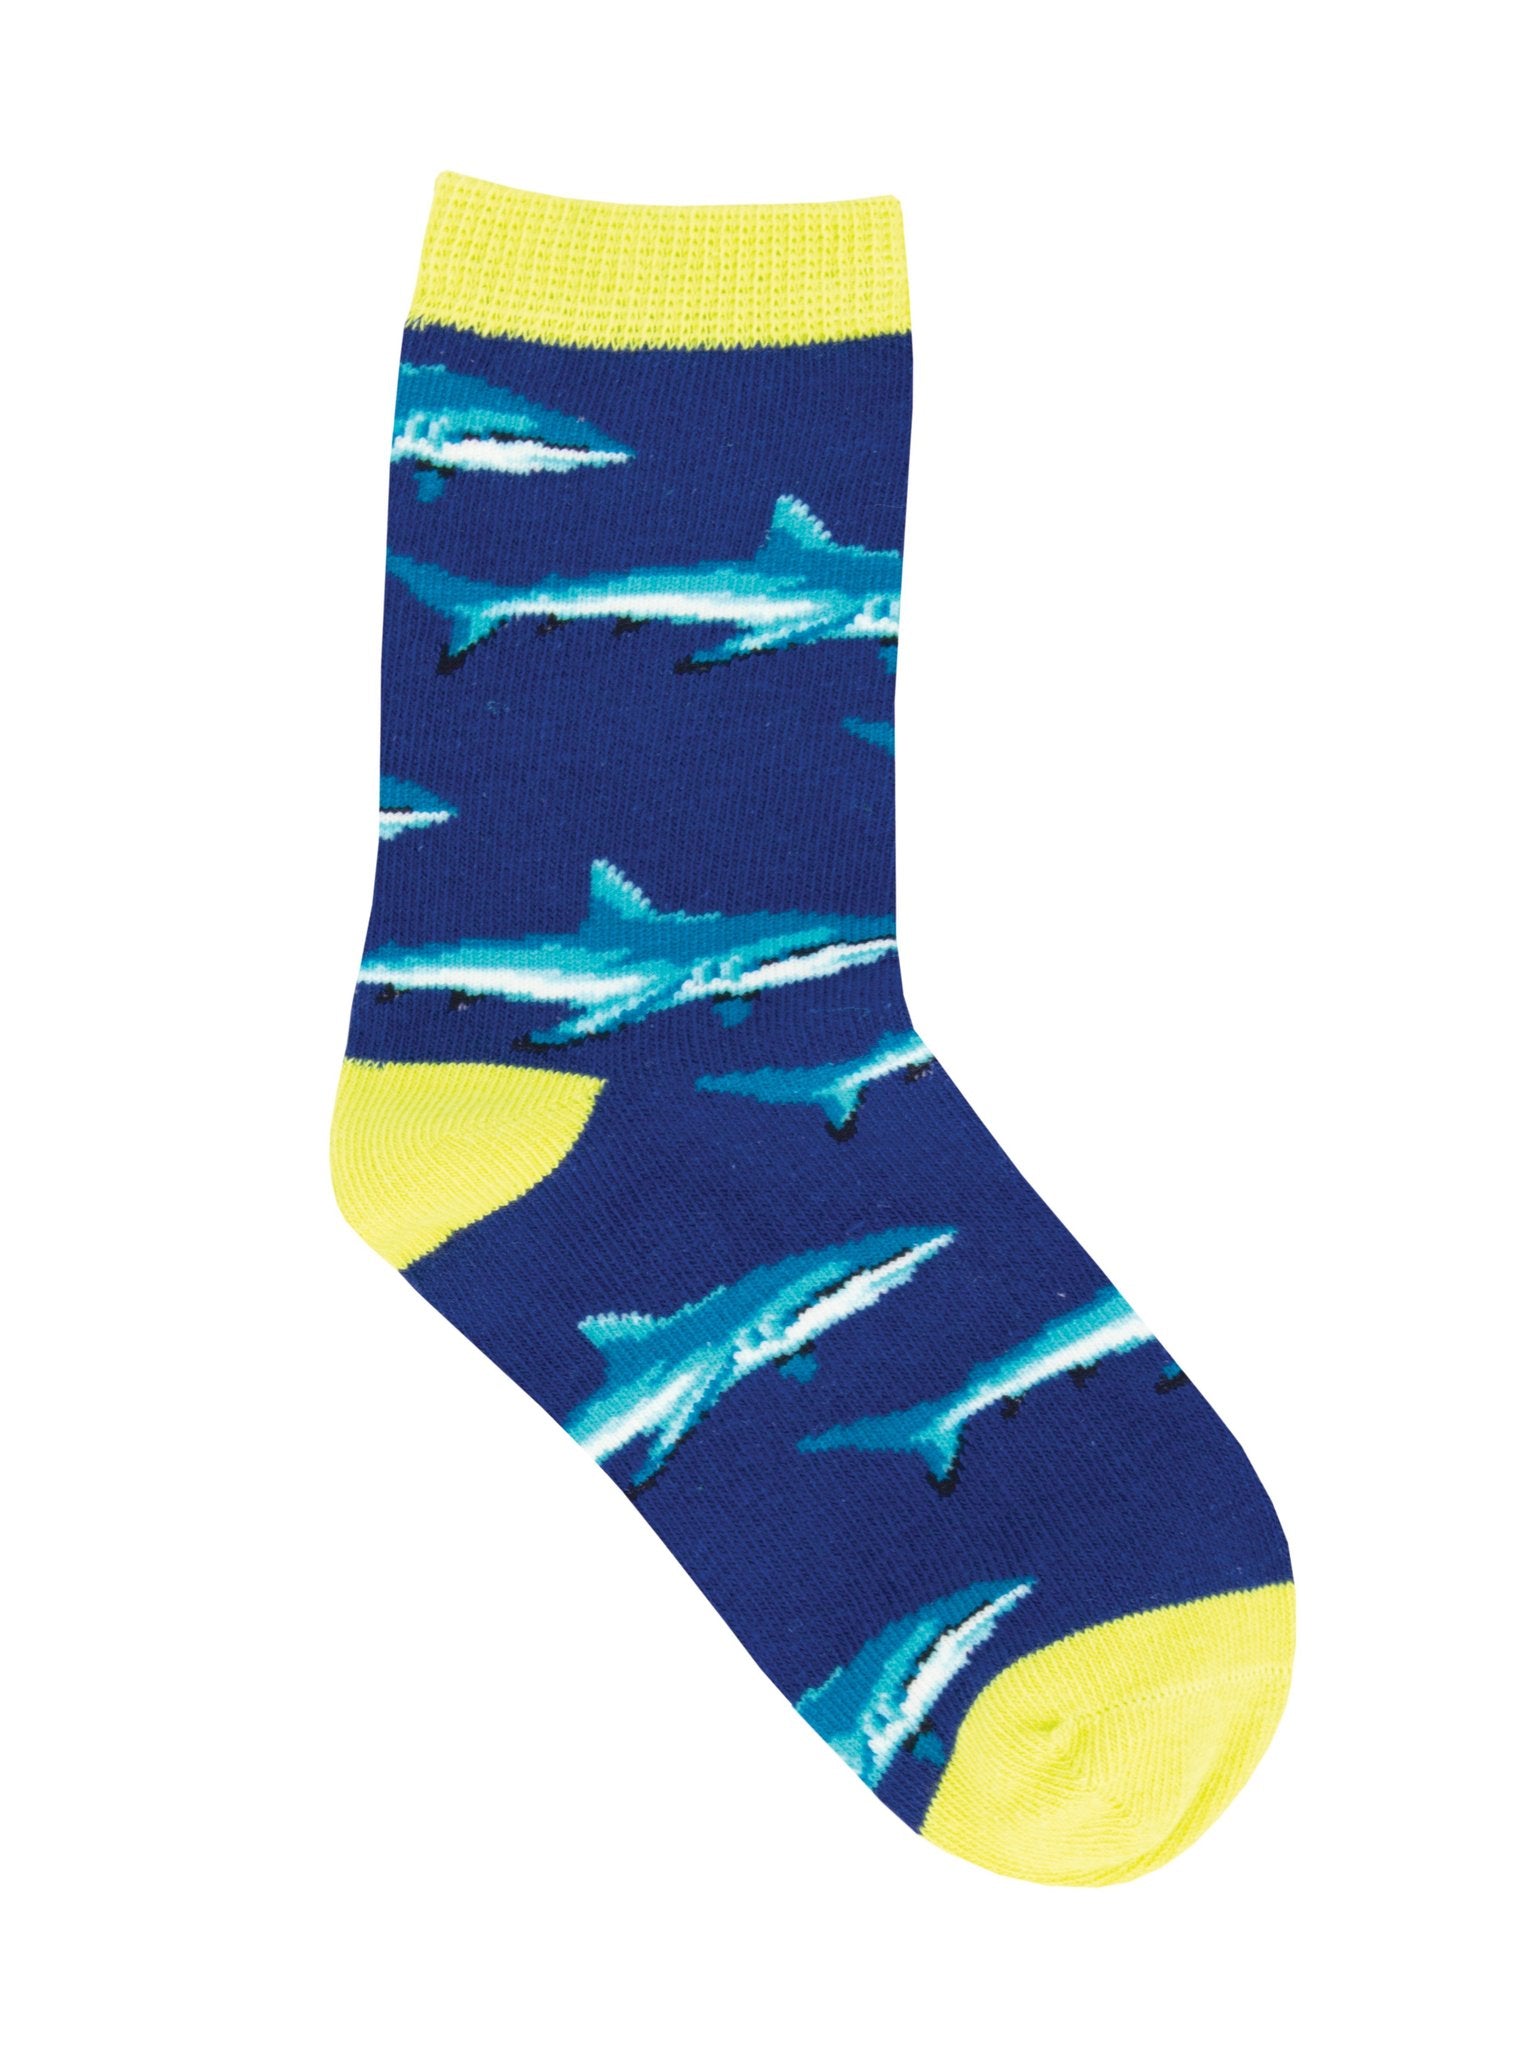 Shark School Kid's Socks Navy (4-7 Years)